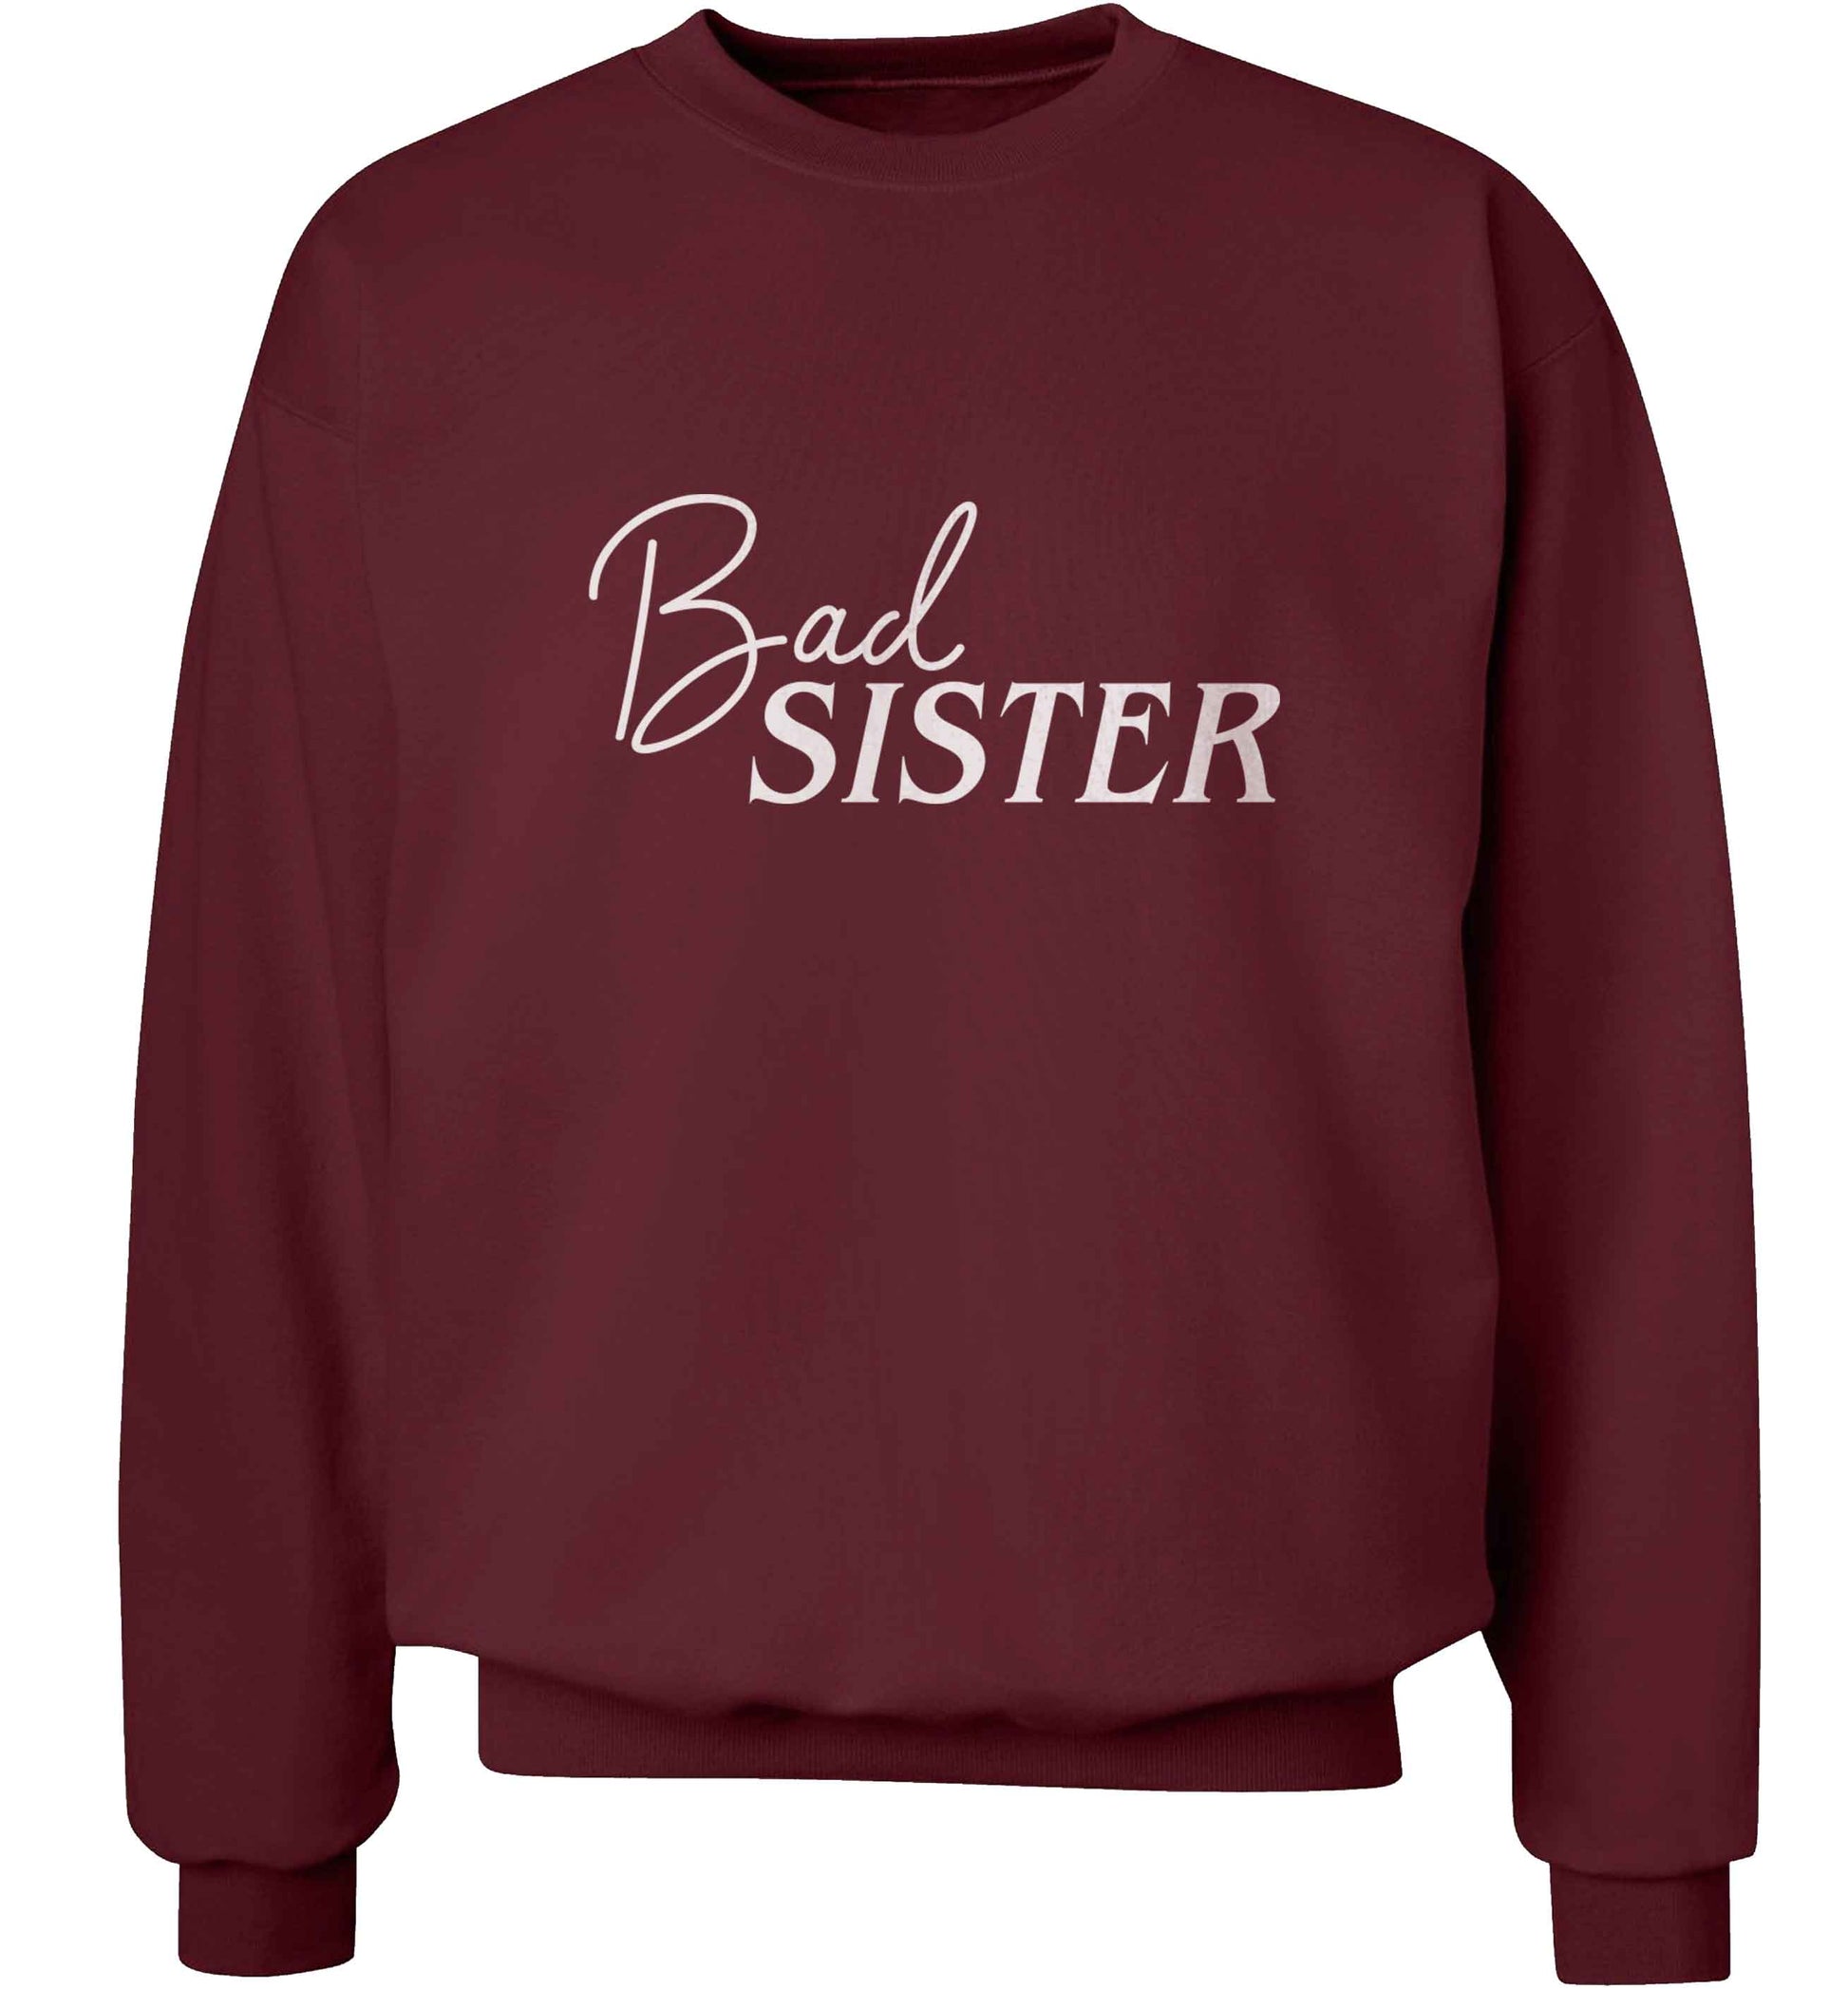 Bad sister adult's unisex maroon sweater 2XL